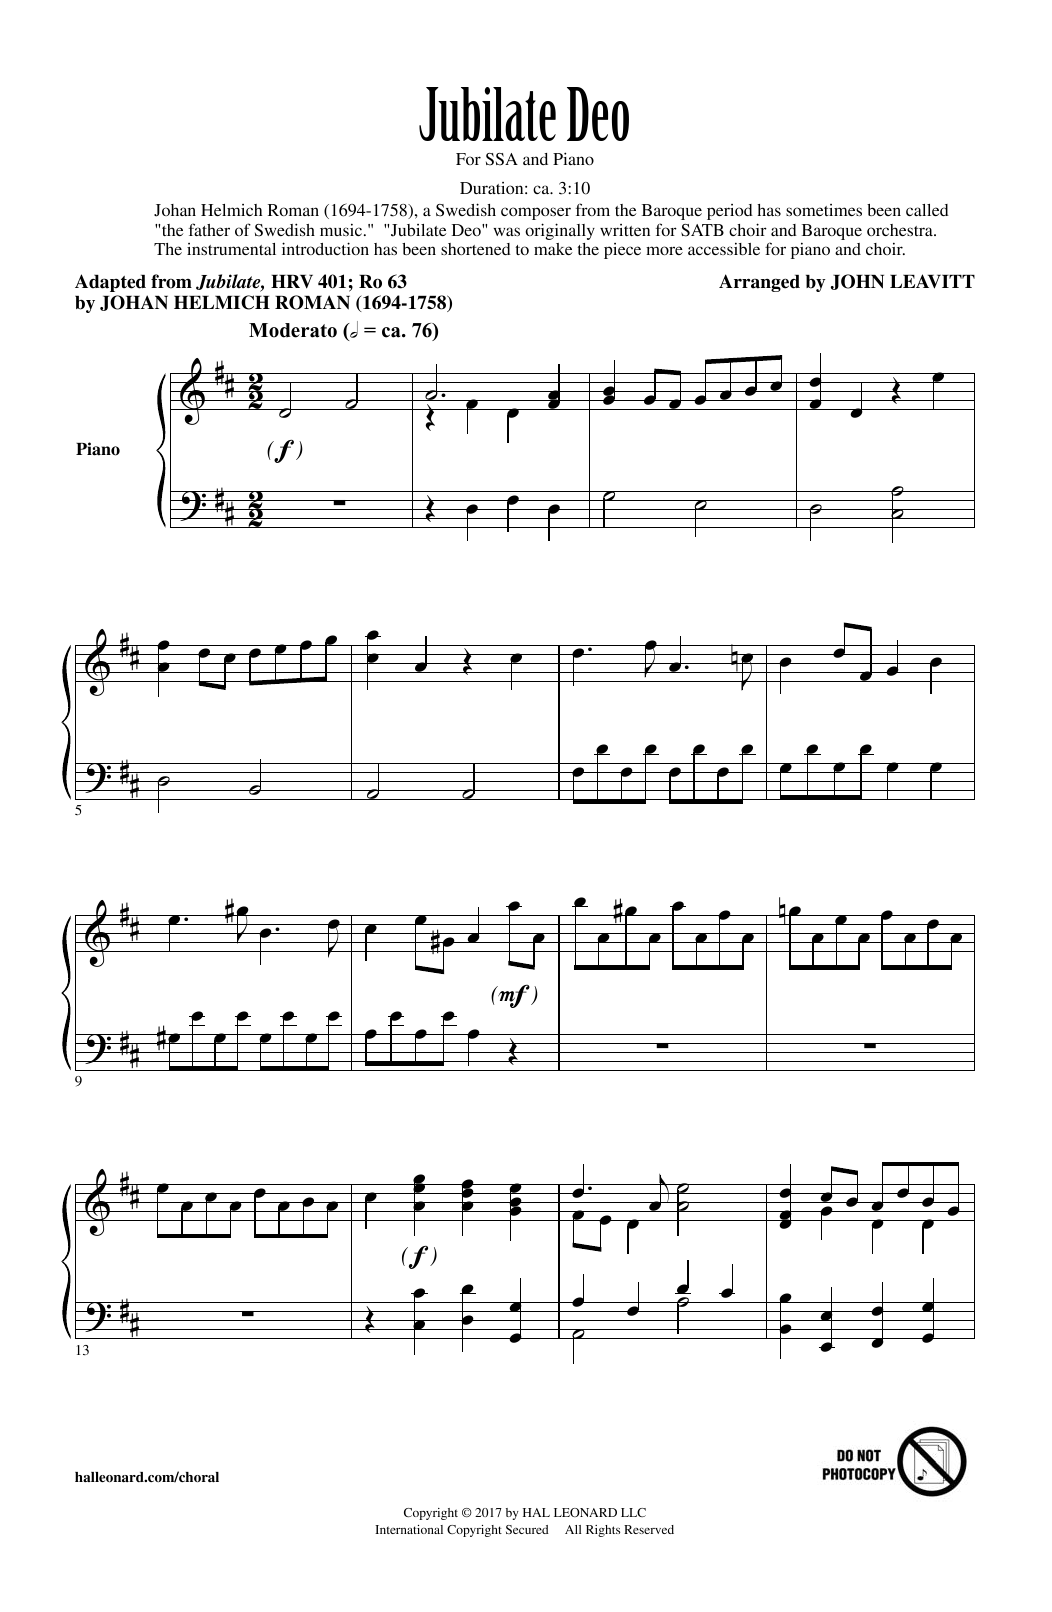 John Leavitt Jubilate Deo Sheet Music Notes & Chords for SSA - Download or Print PDF